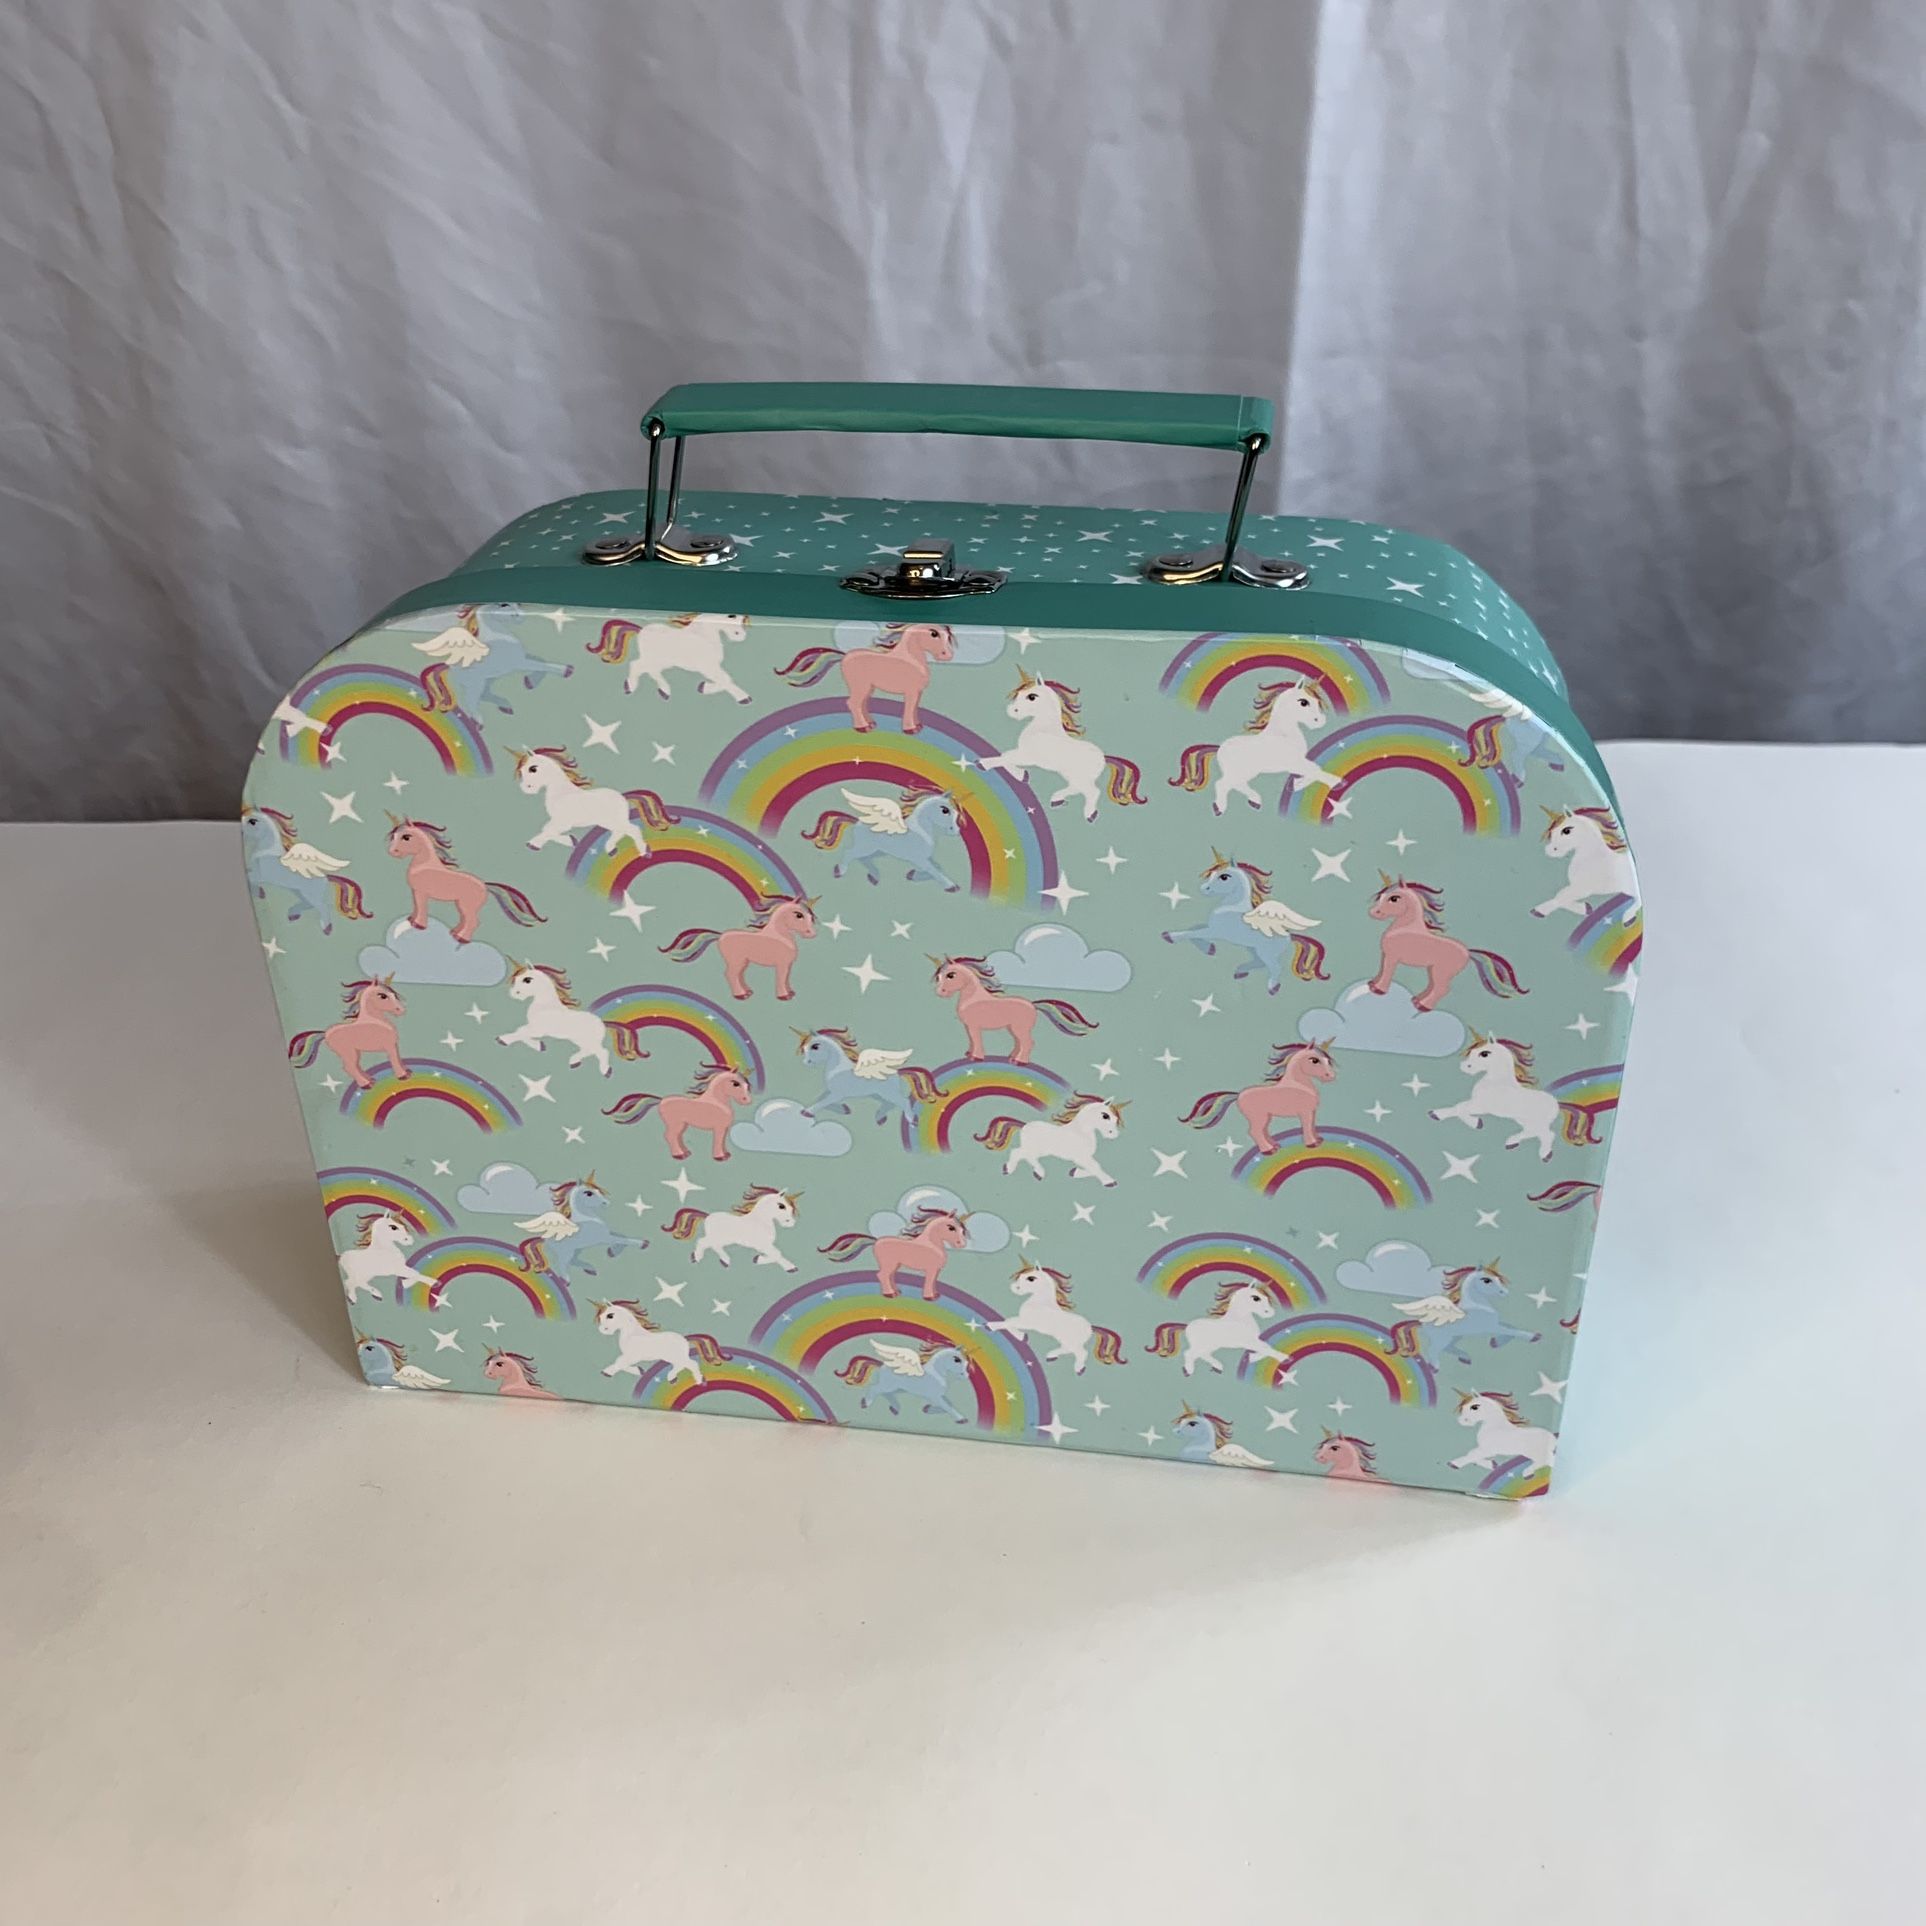 Sew Simply by Artika DIY Unicorn Sewing Kit for Kids